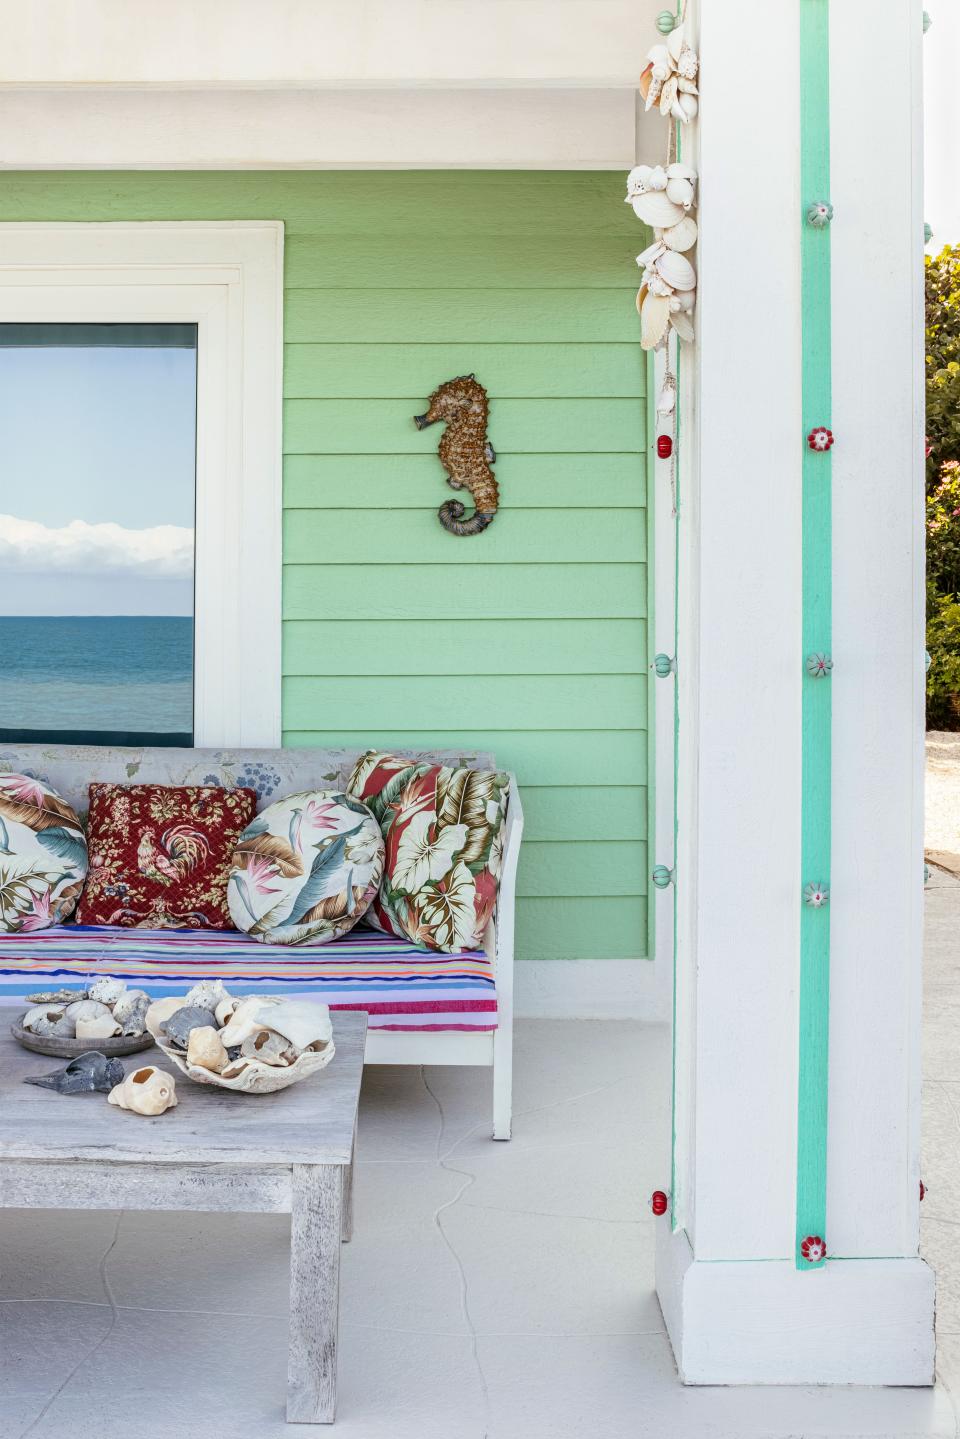 Ximena Caminos’s Vero Beach, Florida, Home Is a DIY Masterpiece